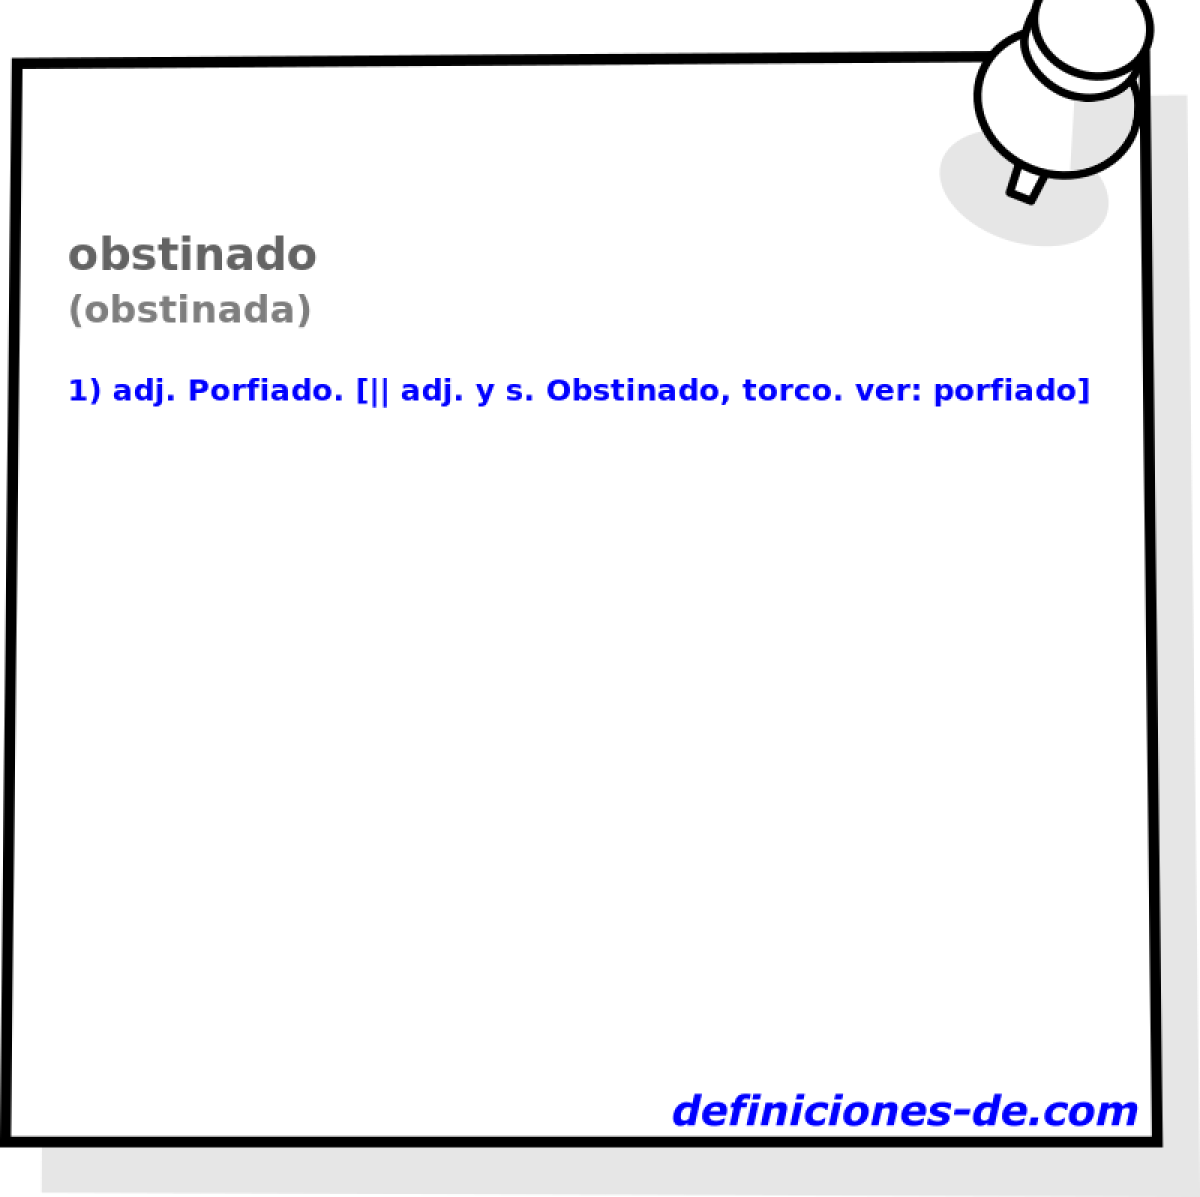 obstinado (obstinada)